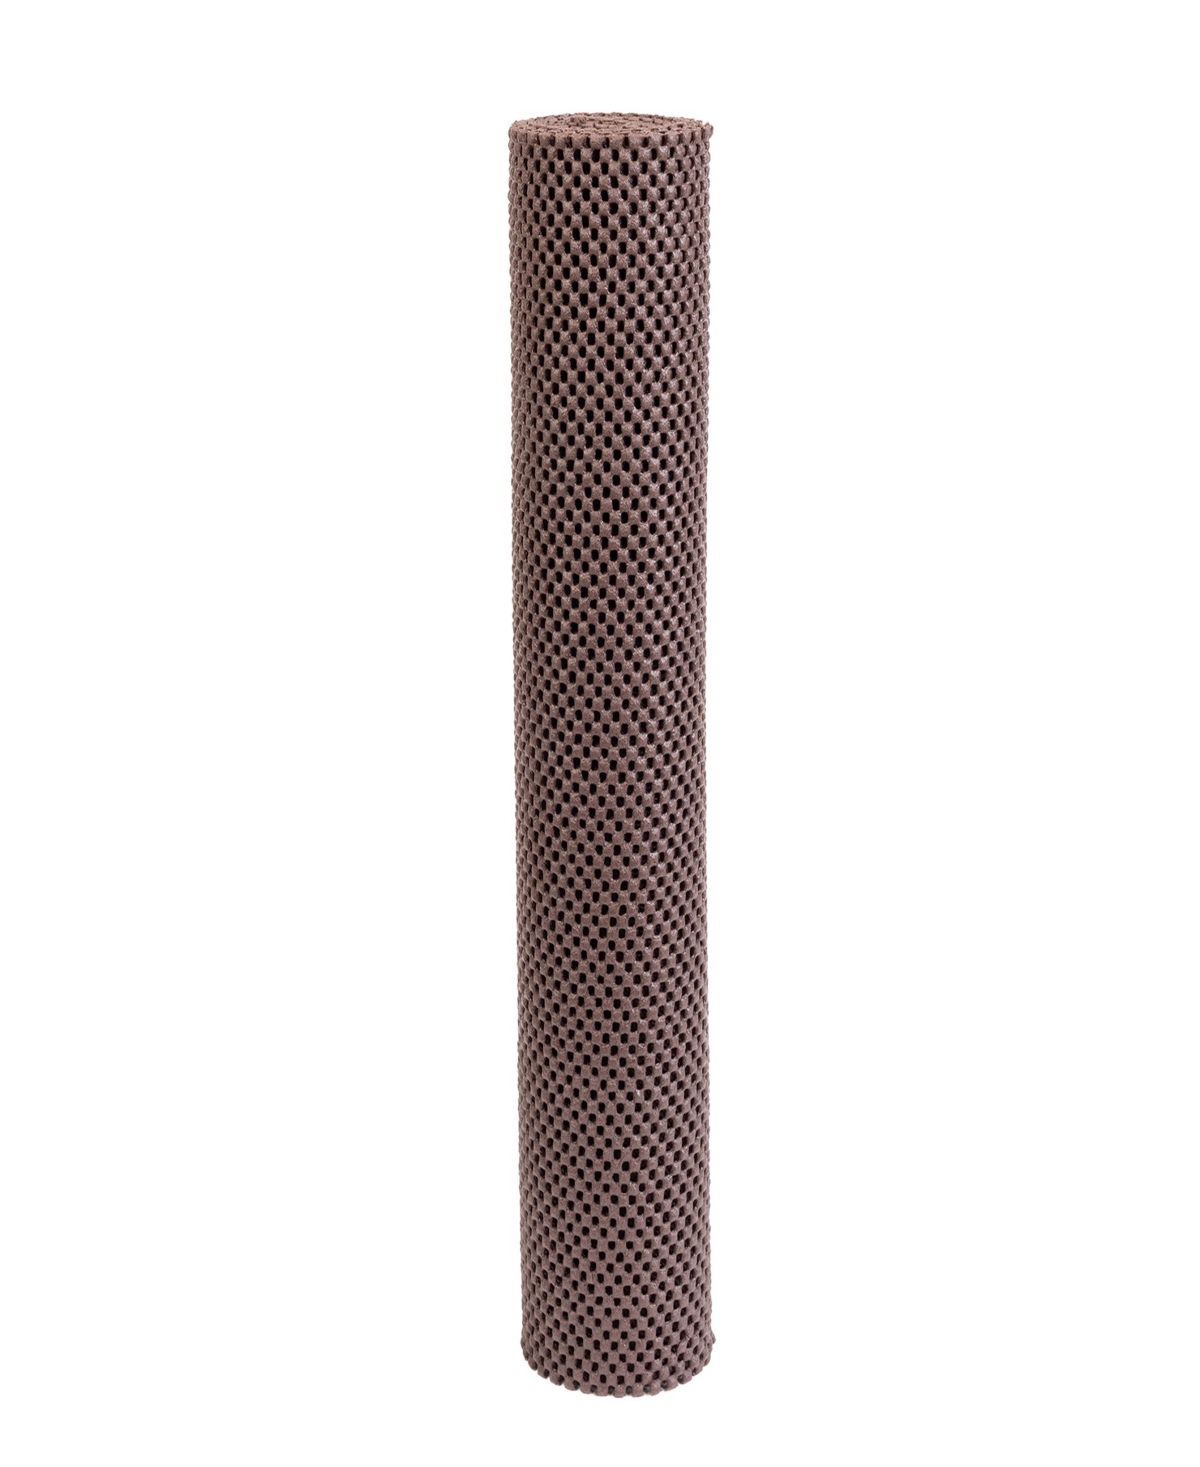 Smart Design Premium Grip Shelf Liner, 18" X 8' Roll In Coffee Bean